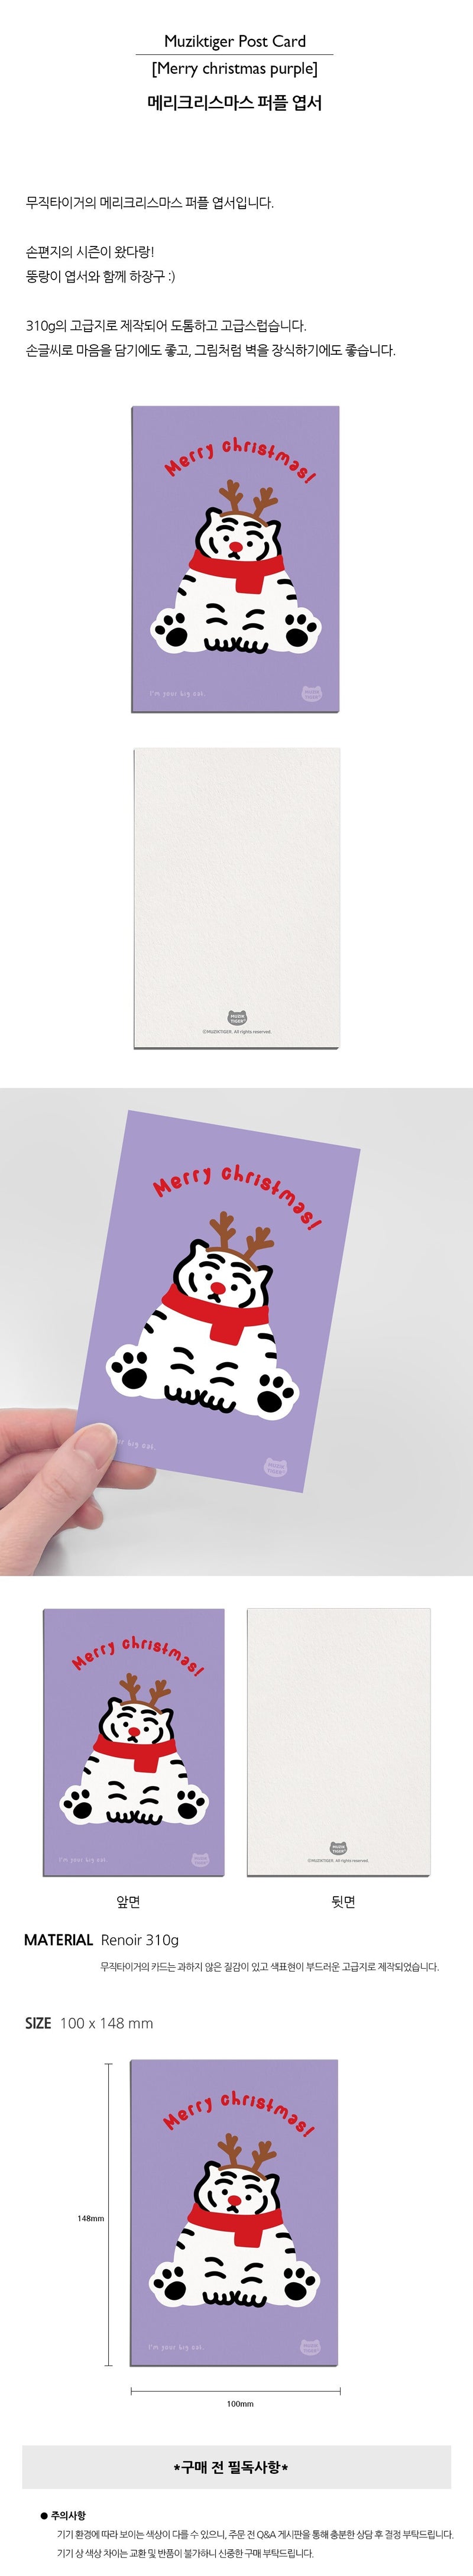 Merry Christmas purple ポストカード